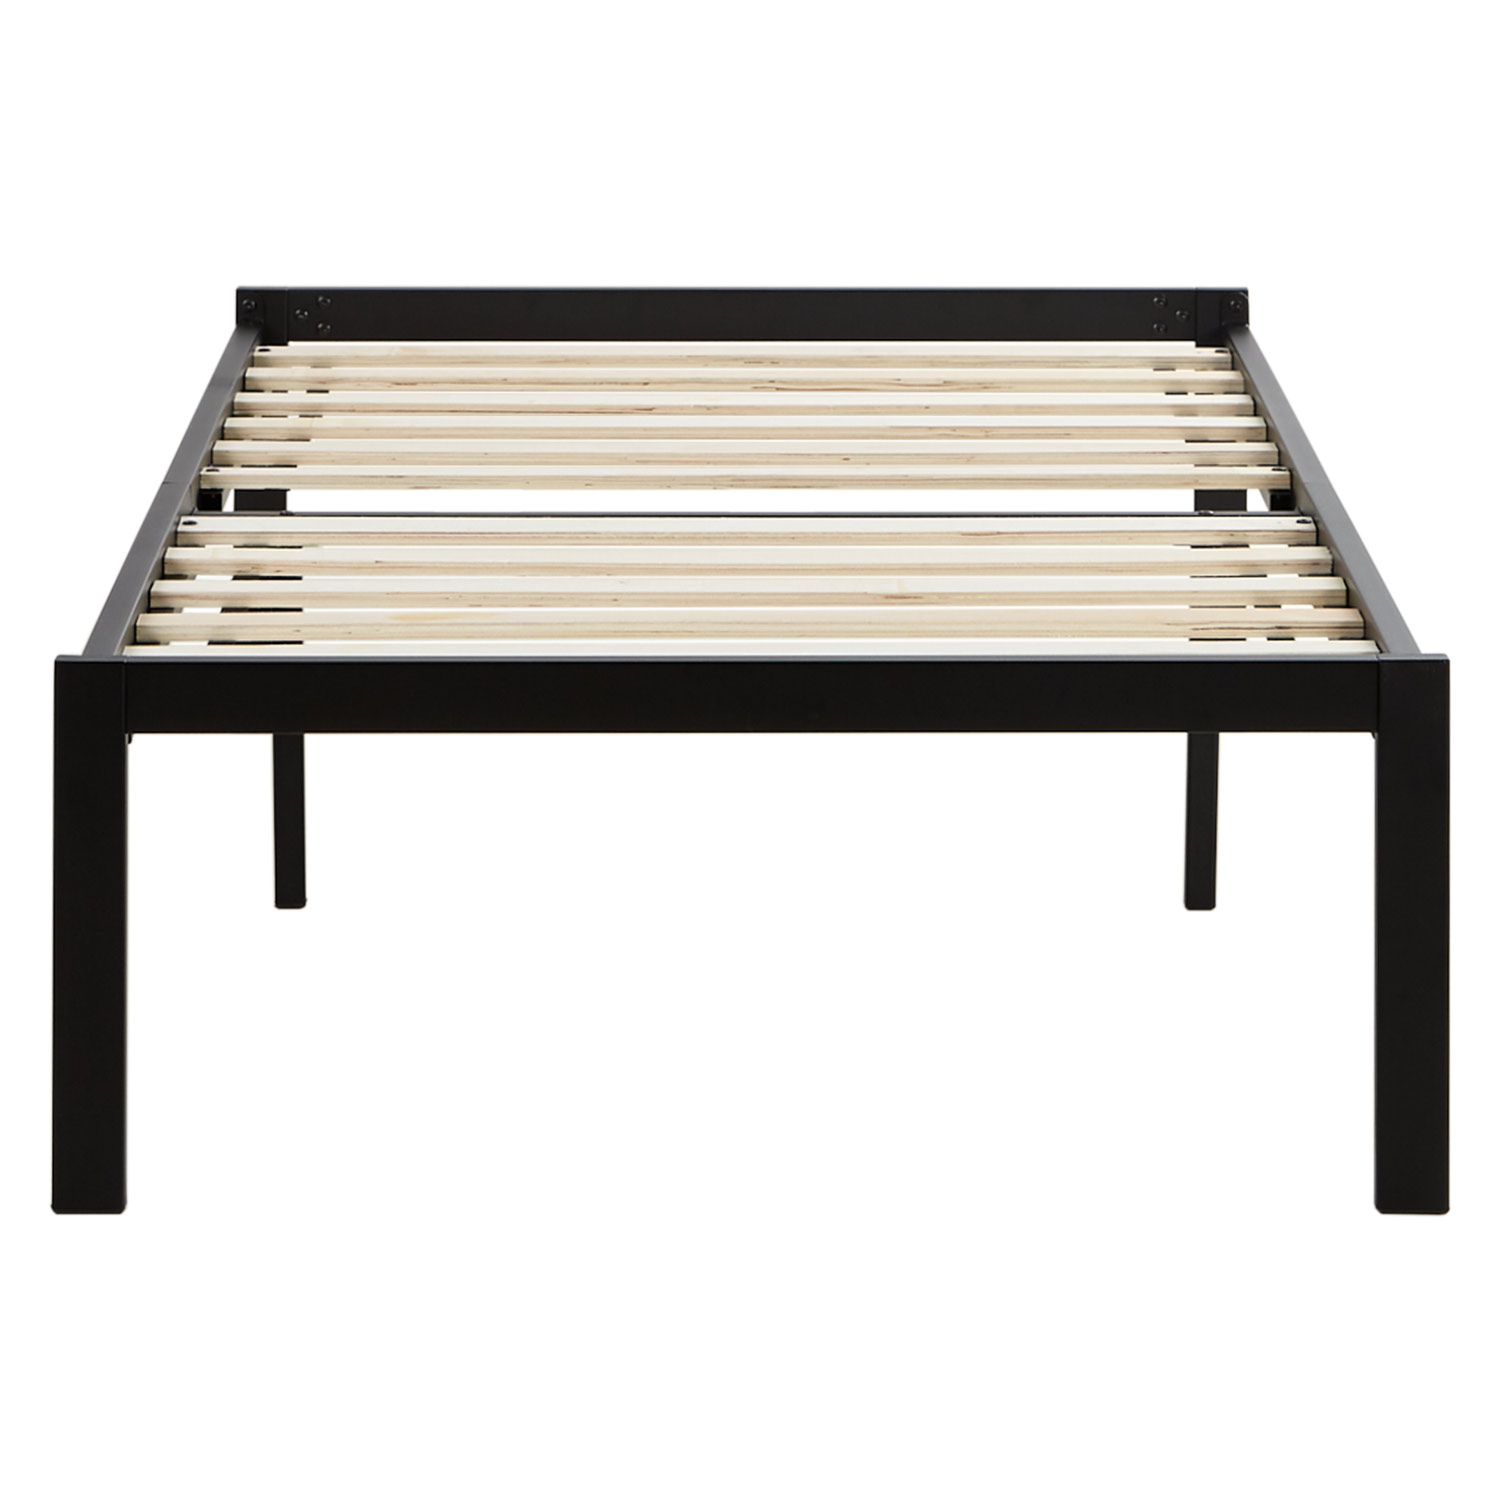 Solid Metal Bed with Mattress 90x200 cm Slatts Single Bed Black Futon Bed Platform Bed Frame Guest Bed 